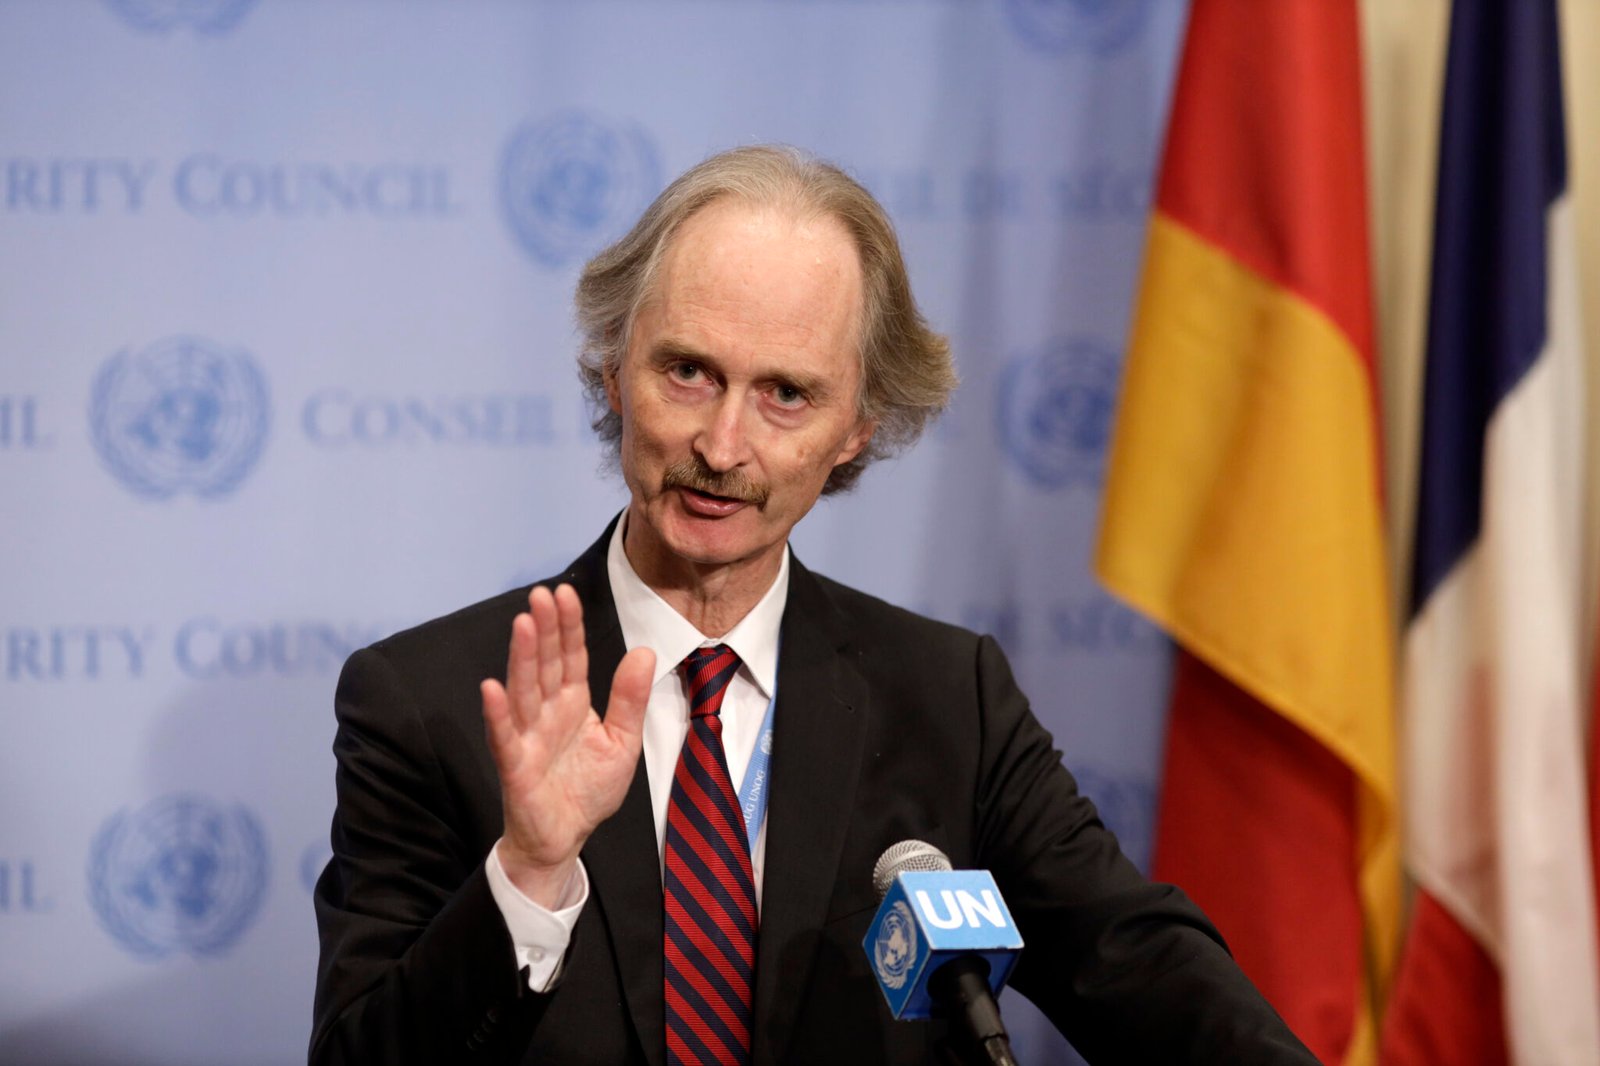 UN Special Envoy for Syria Geir Pedersen